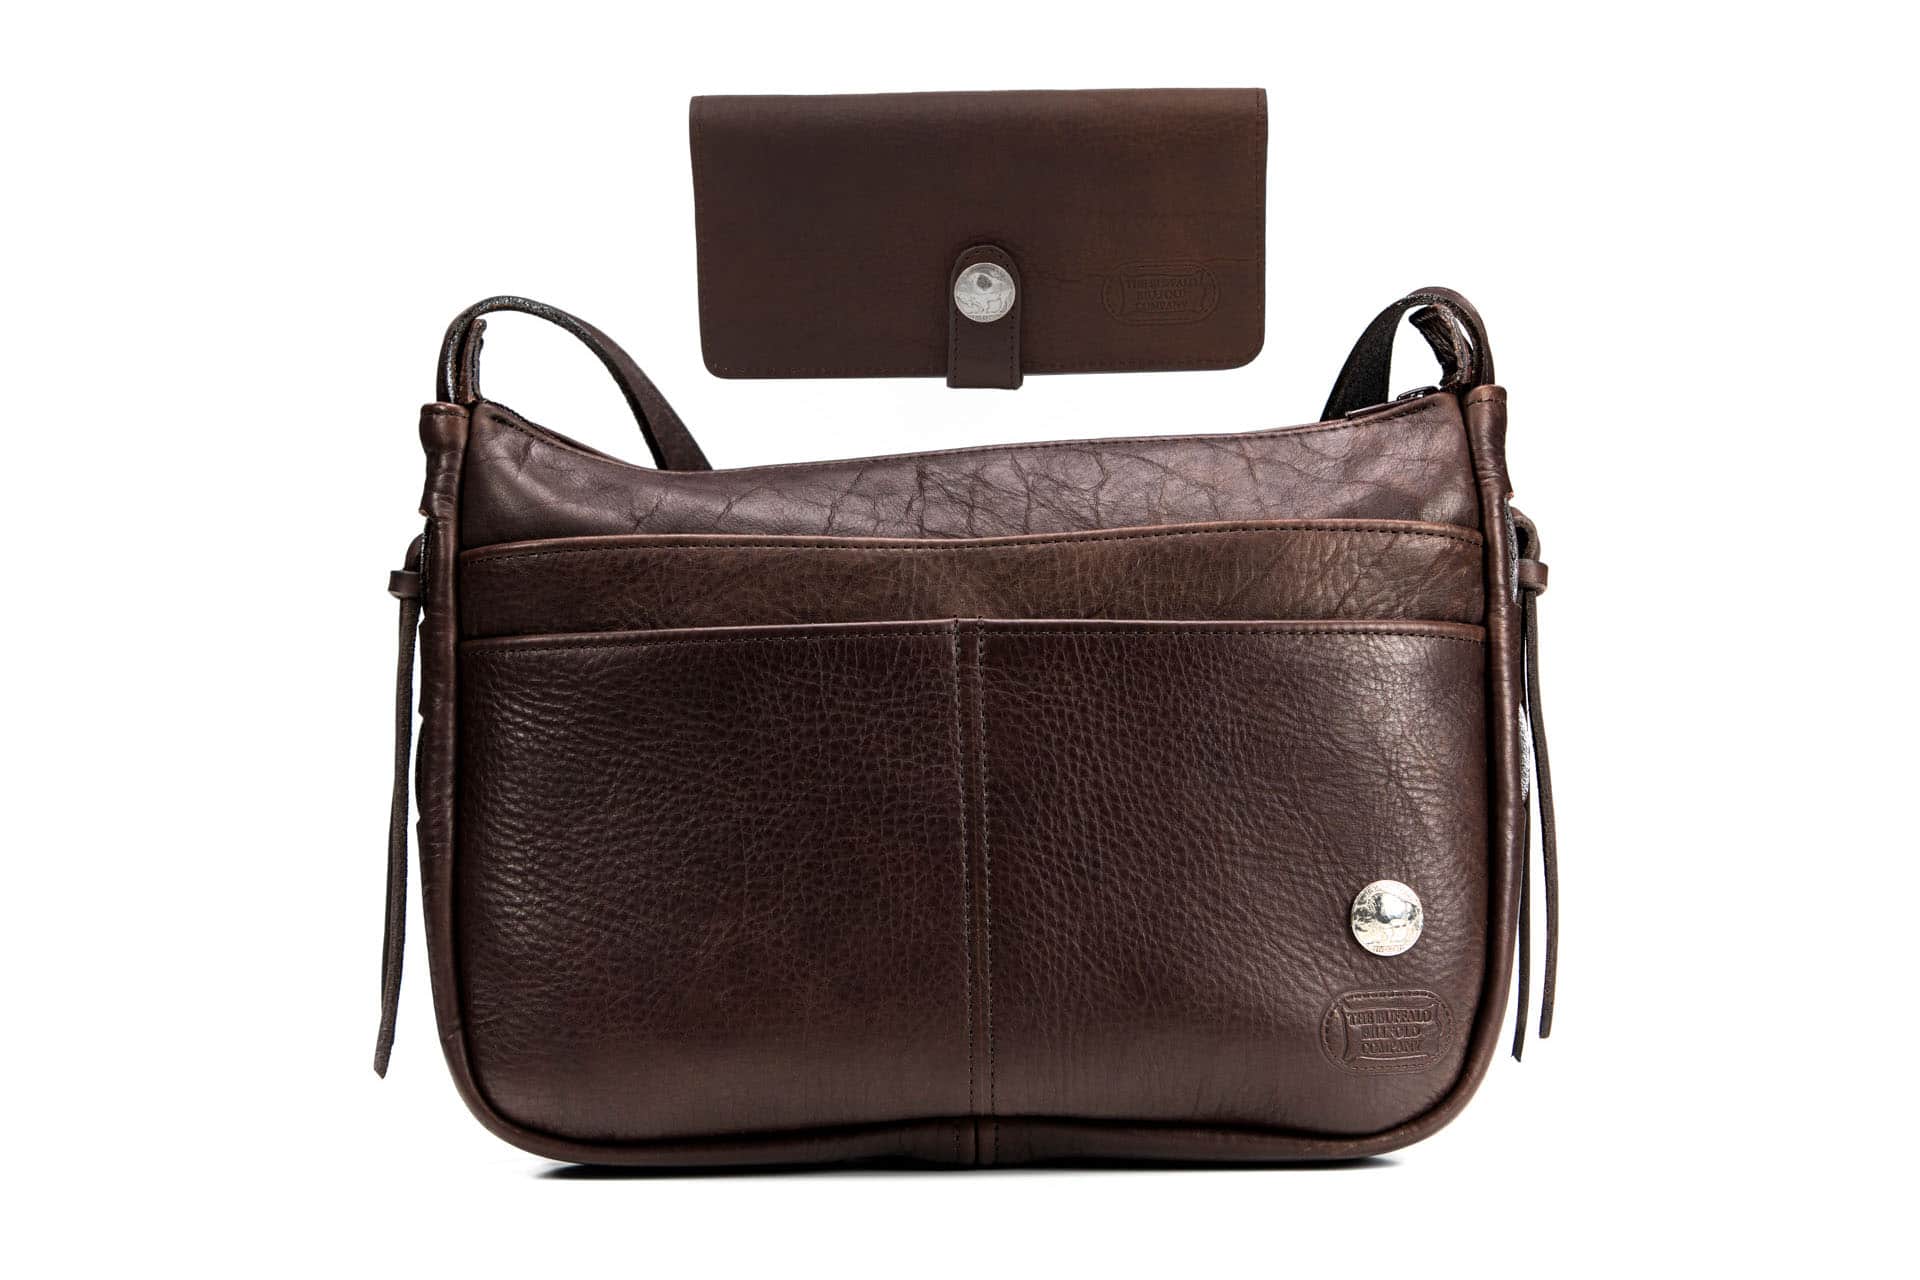 Bifold Leather Wallet, Dakota